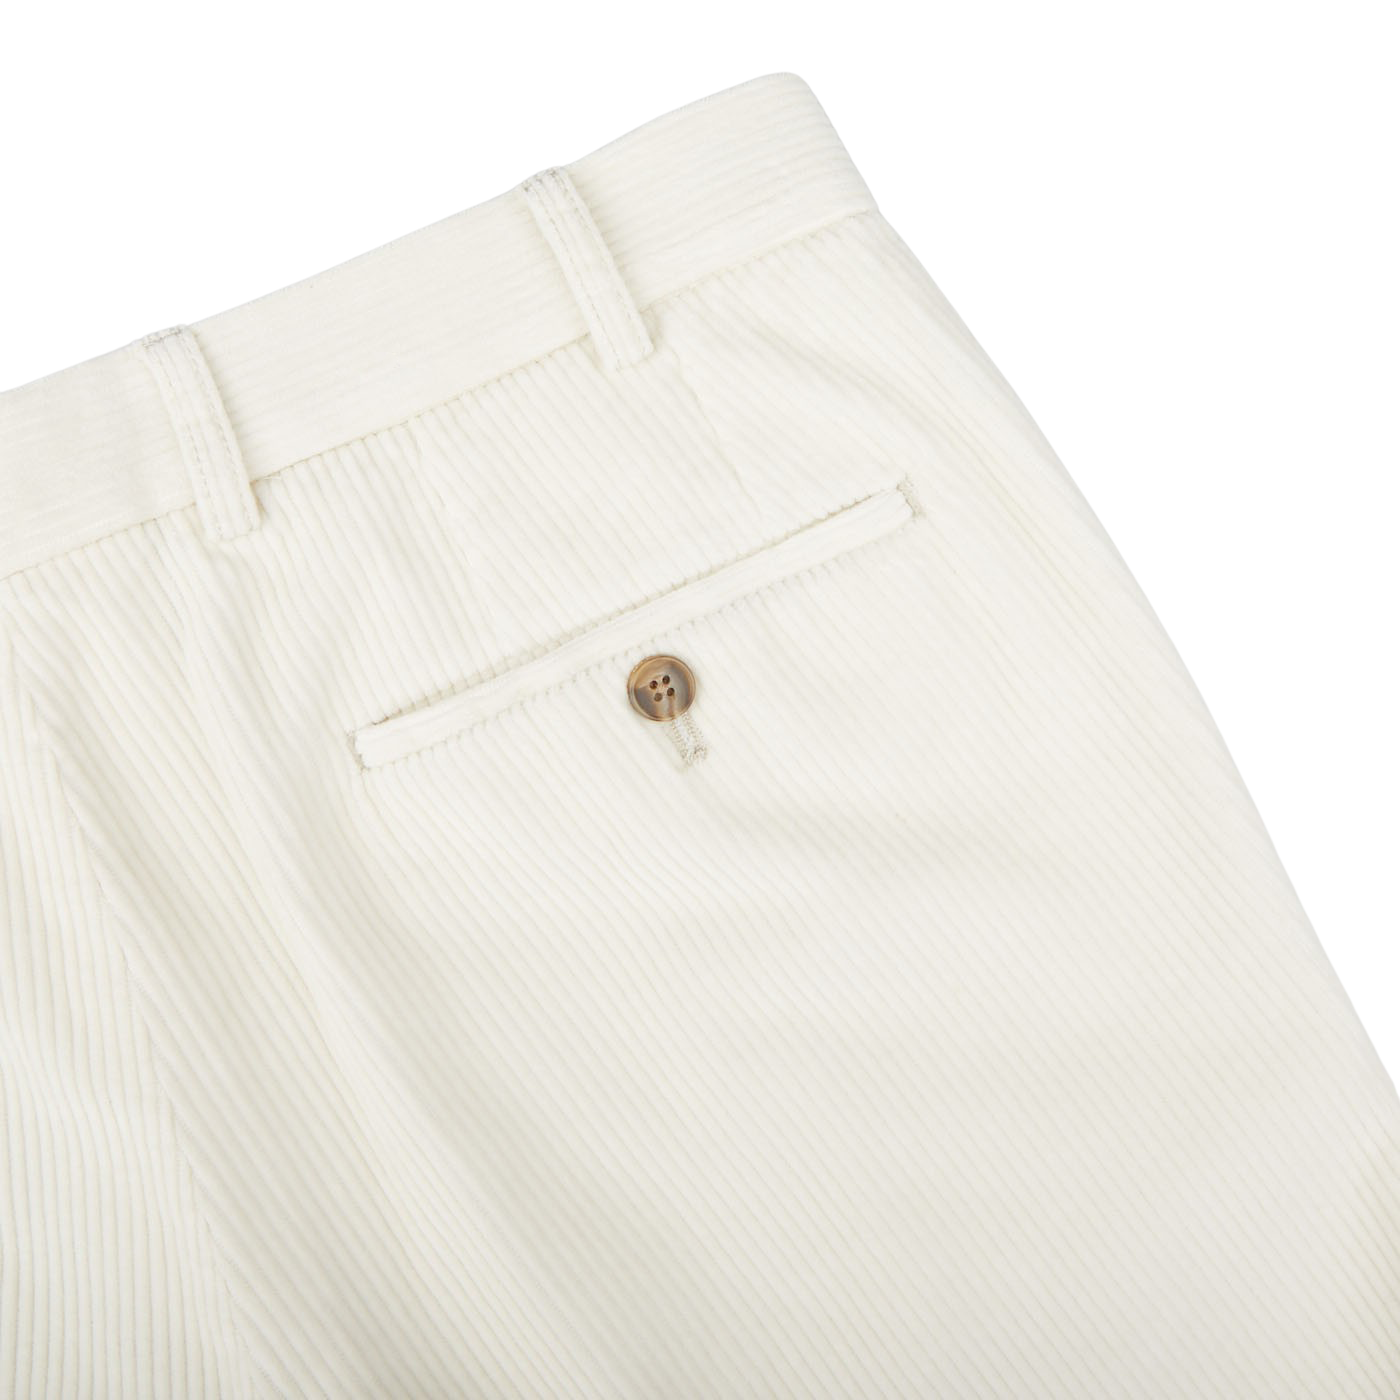 Hiltl Cream White Cotton Corduroy Regular Fit Chinos Pocket1